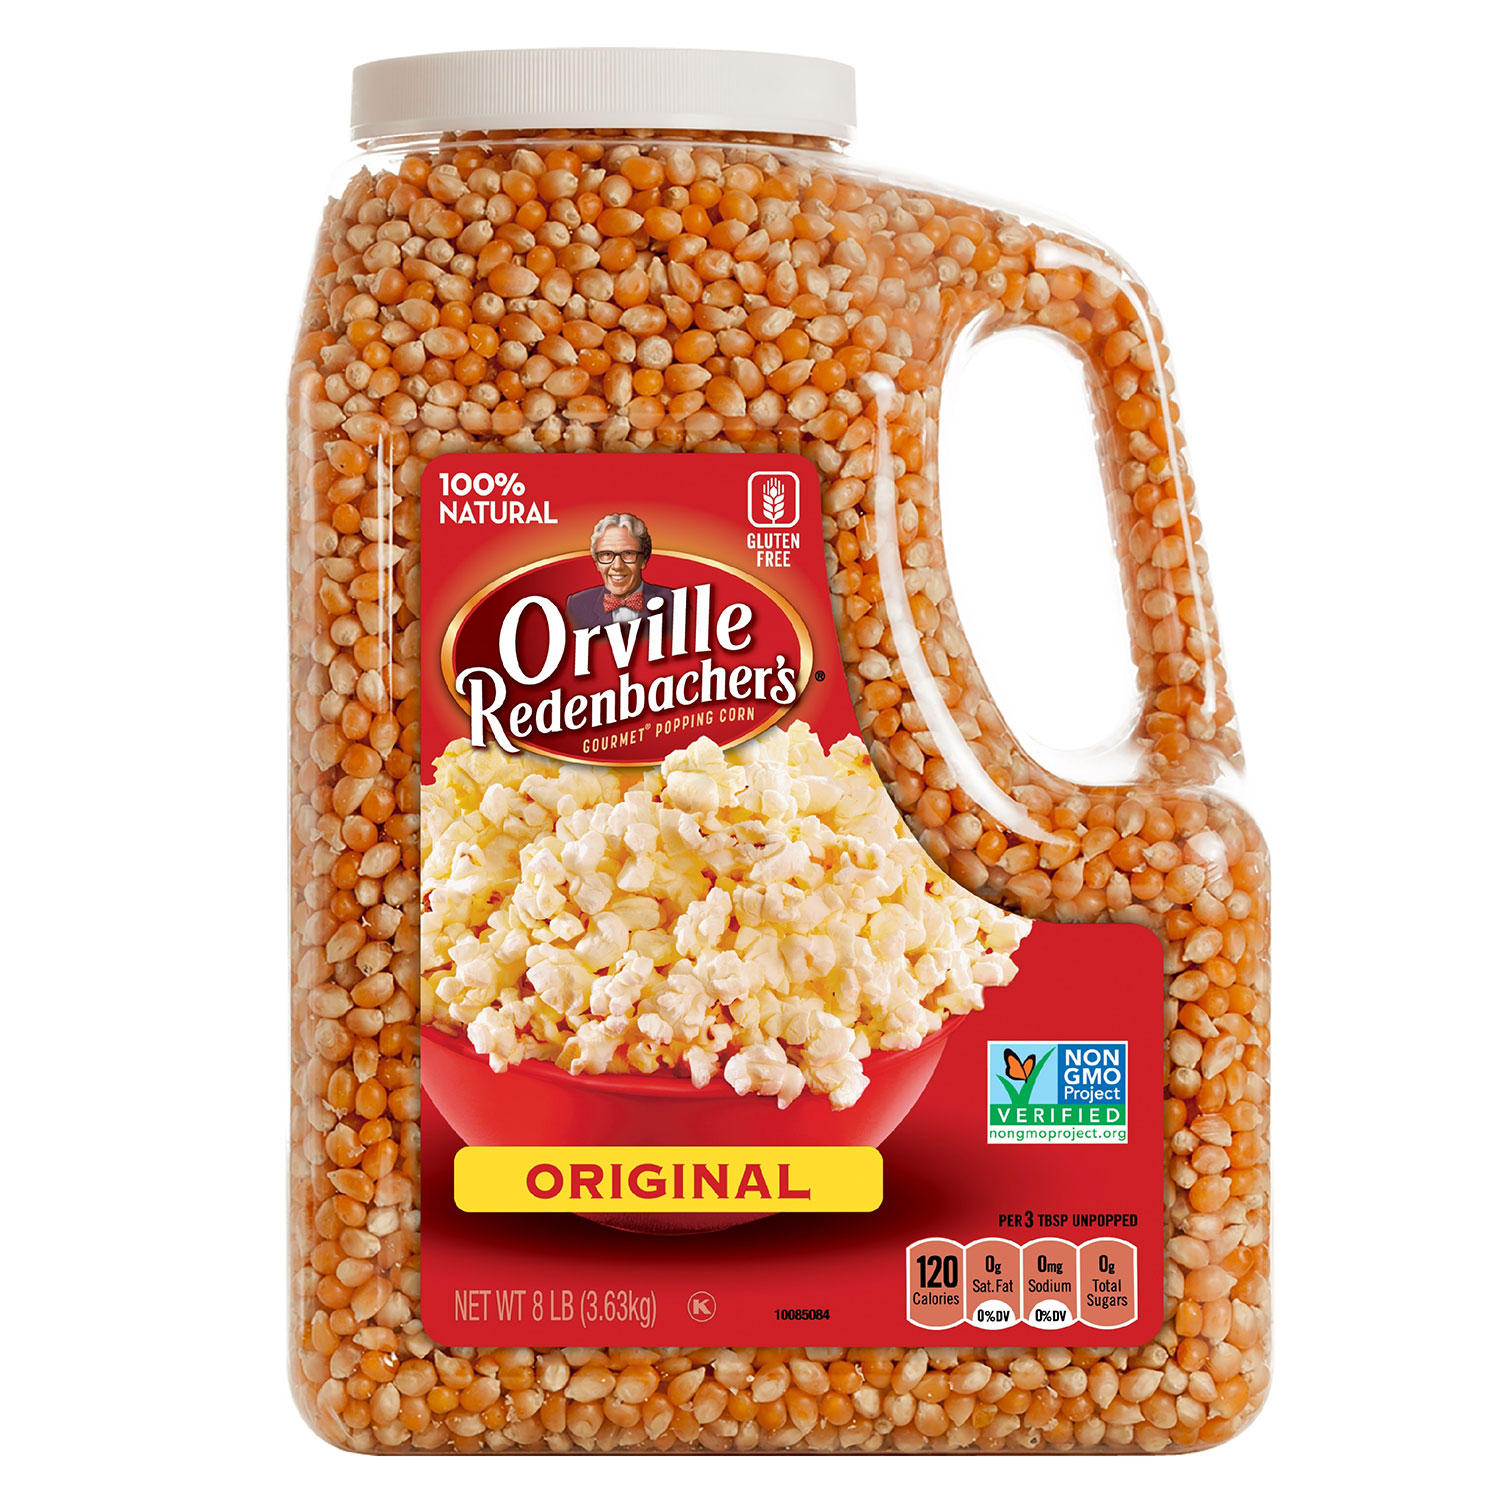 Orville Redenbacher's Original Gourmet Popcorn Kernels 8 lb.